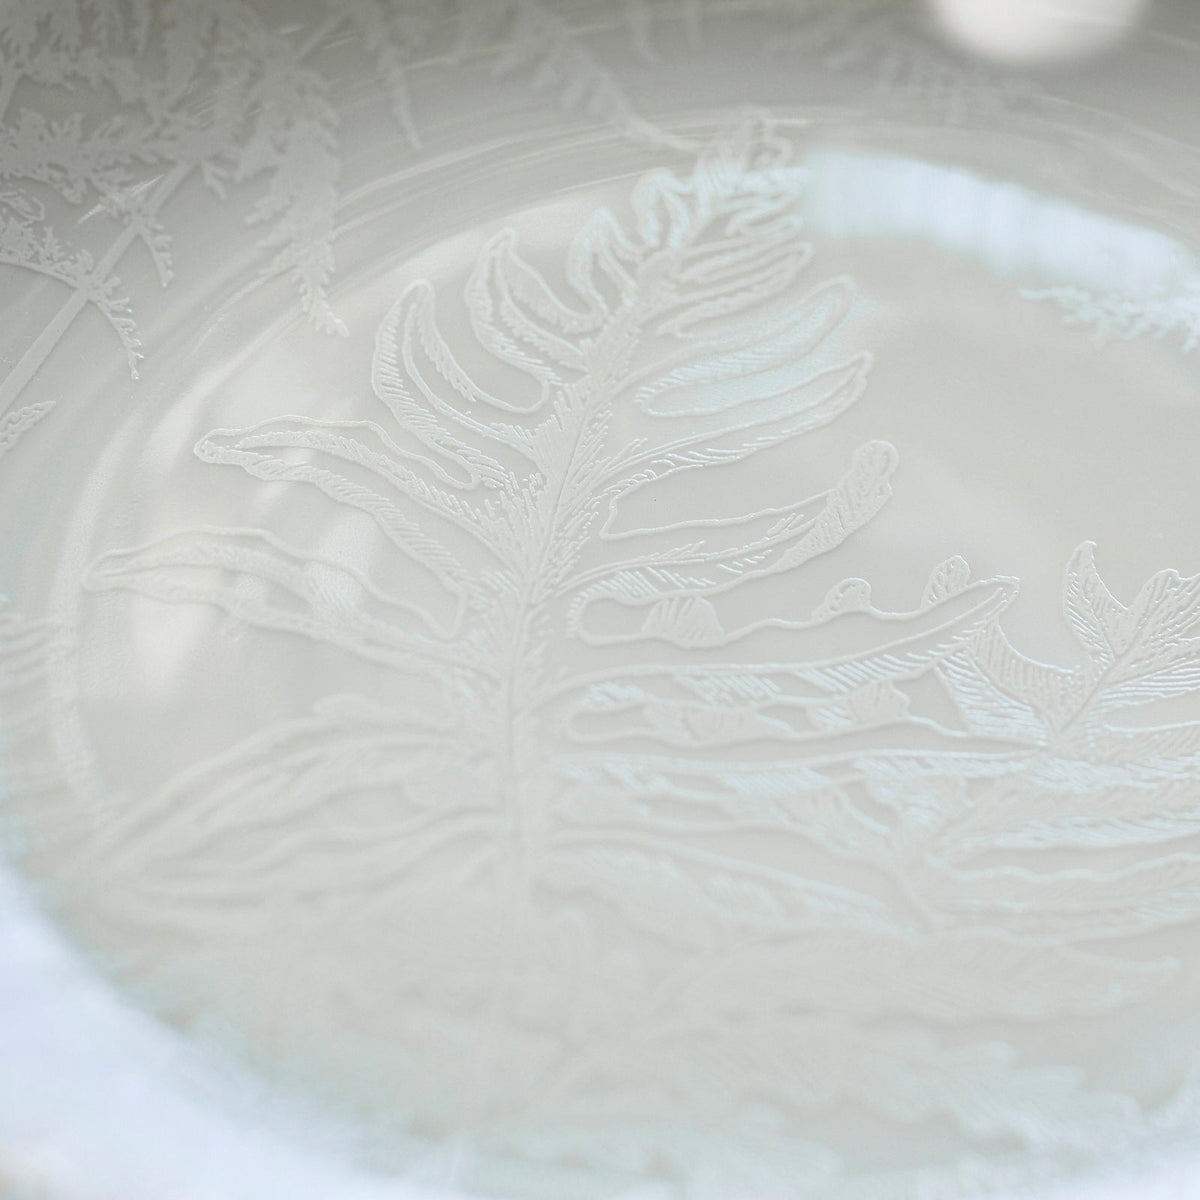 Spring Coupe Platter - Closeup detail of raised white on white porcelain fernsCaskata